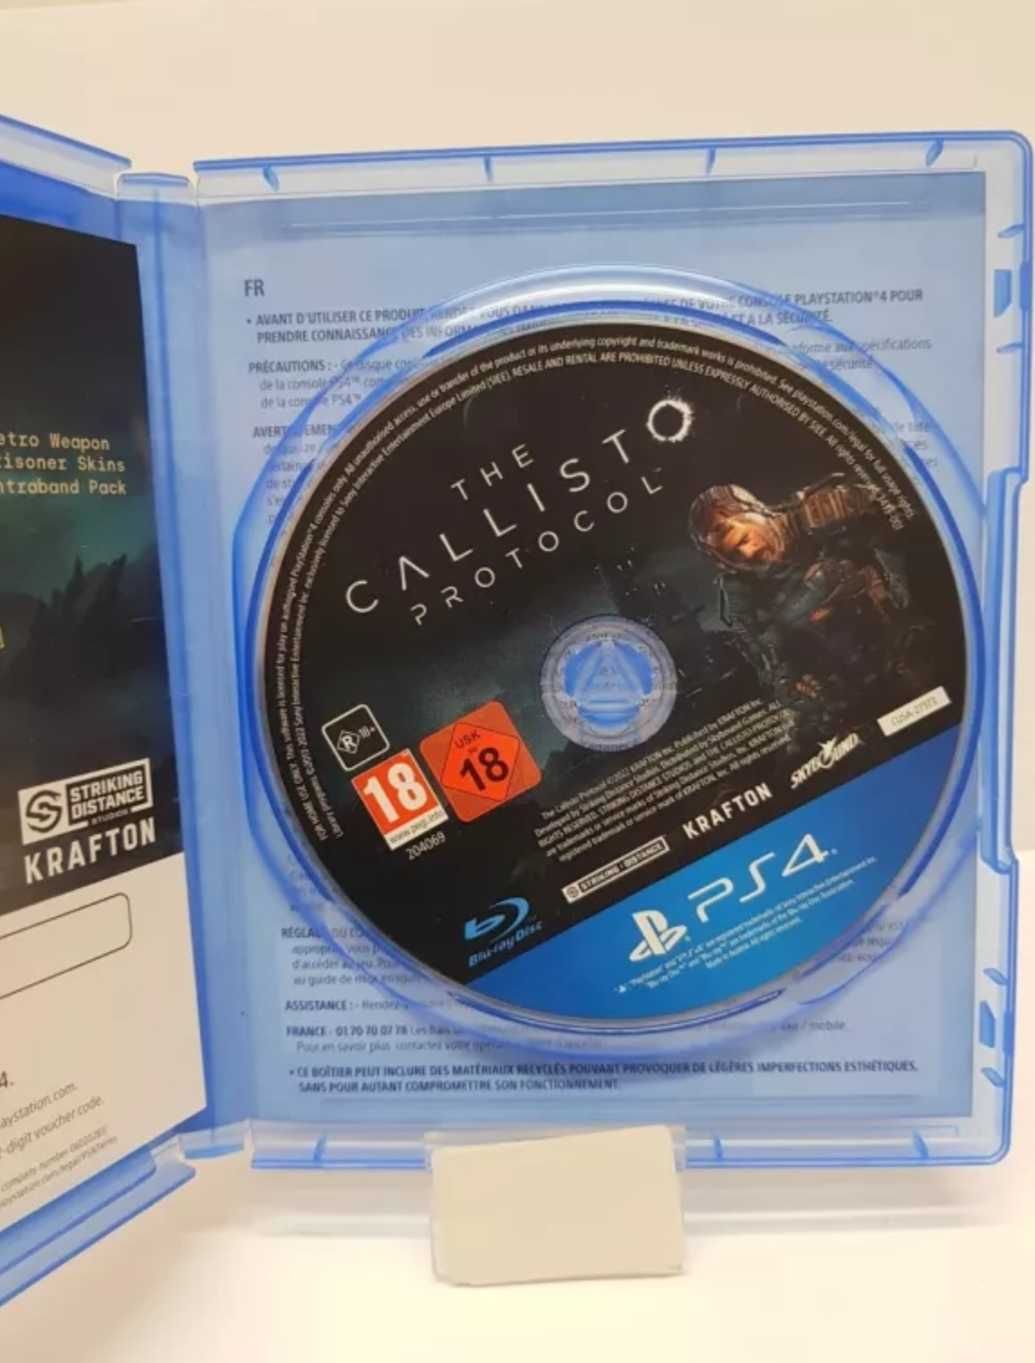 PS4 Calisto Protocol PlayStation 4